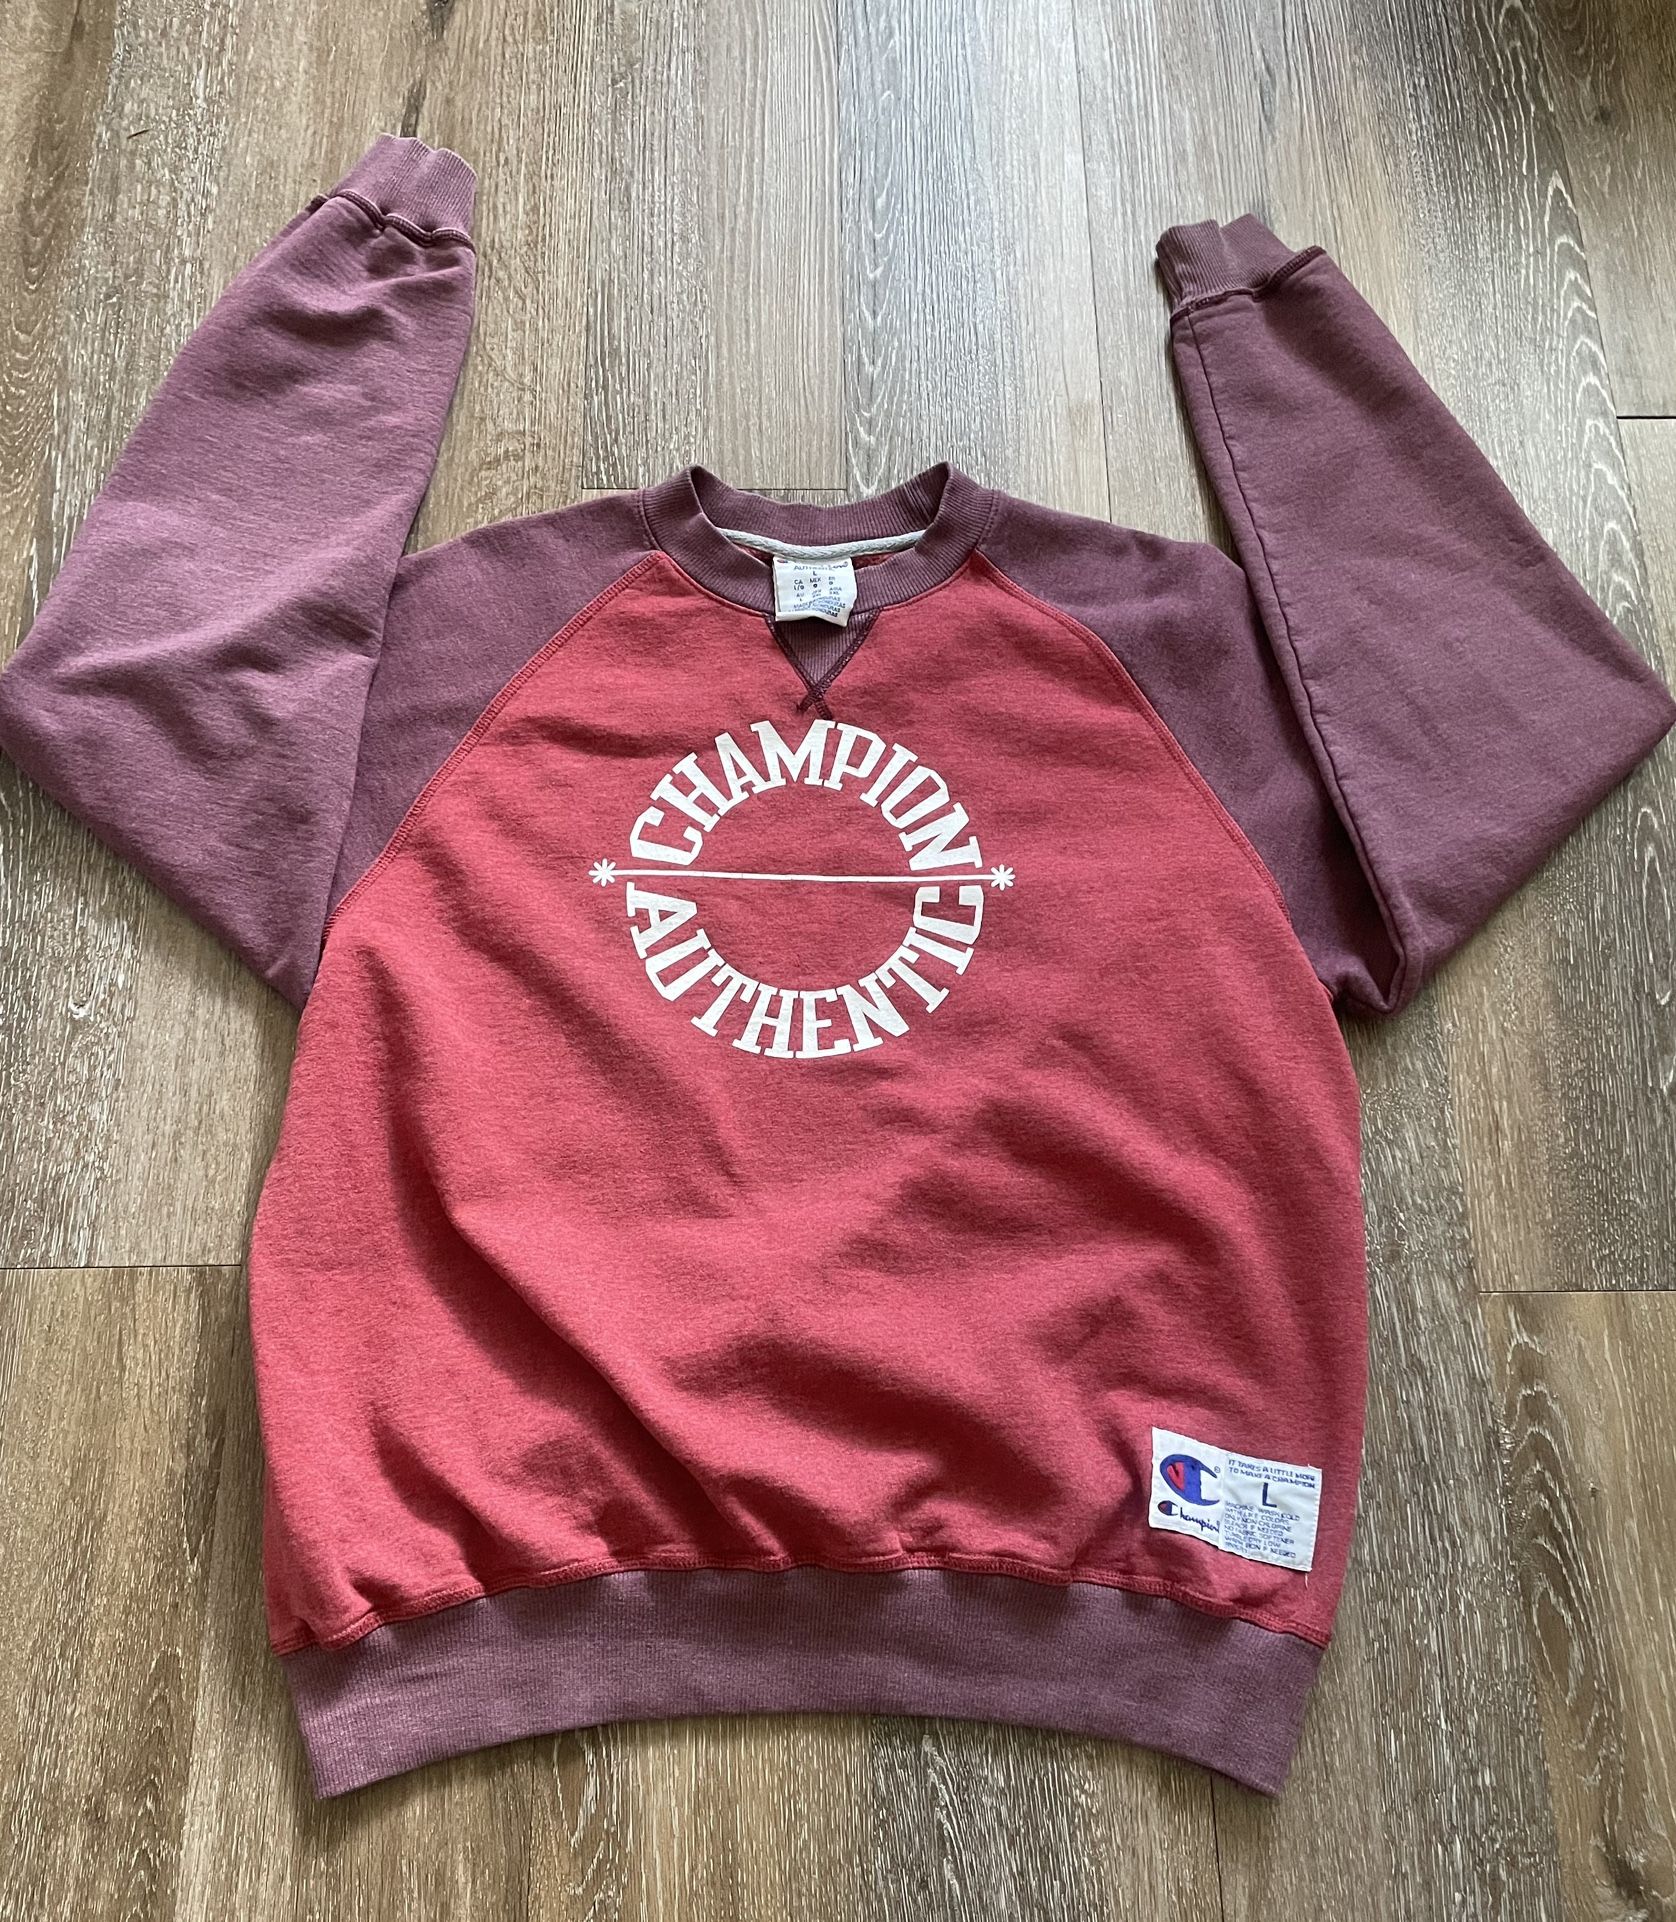 Champion Authentic Maroon Sweatshirt 